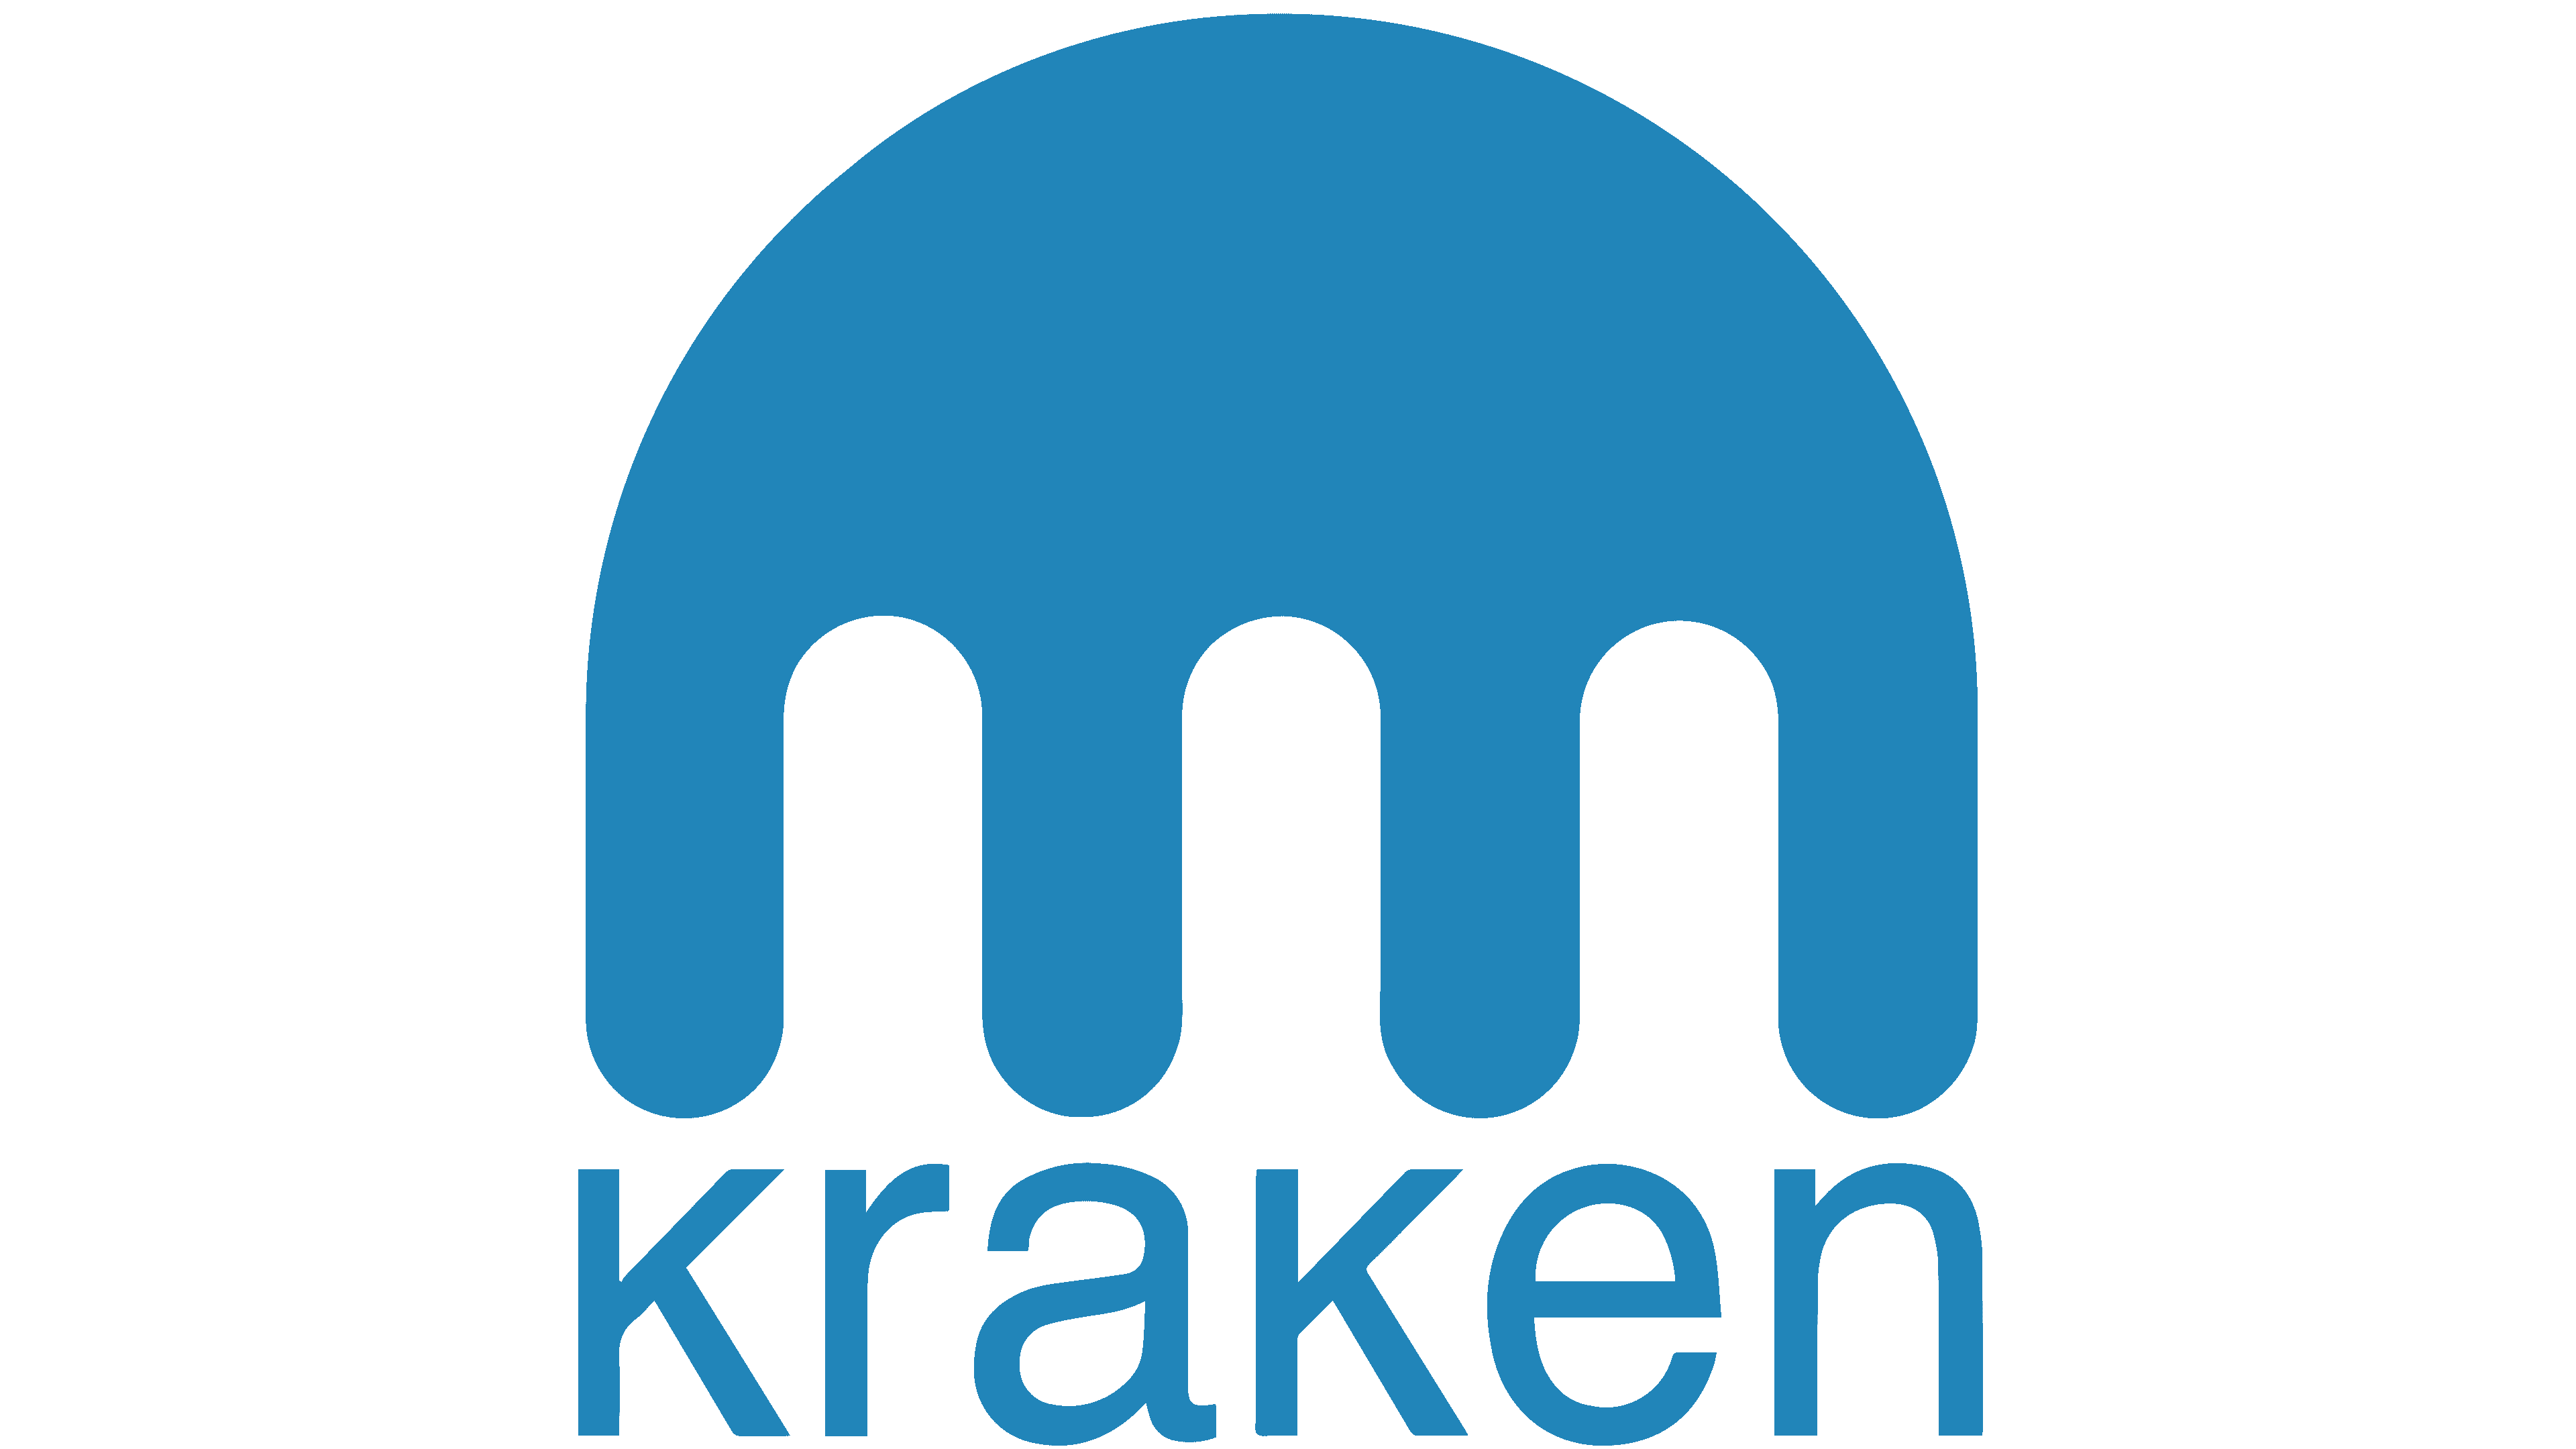 www.kraken.com